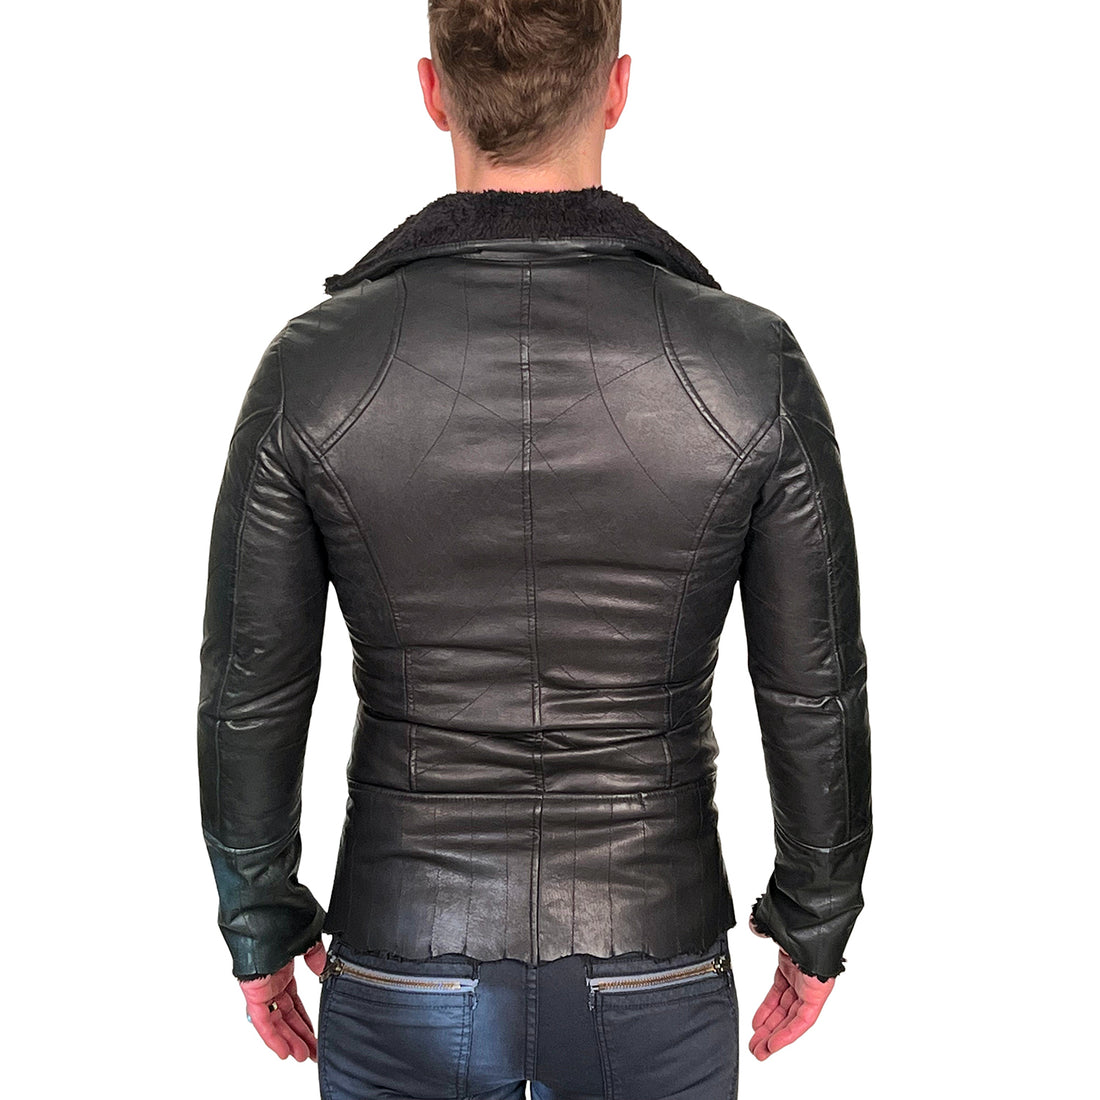 Men's OBELISK - "BONDING" Black Leather Jacket